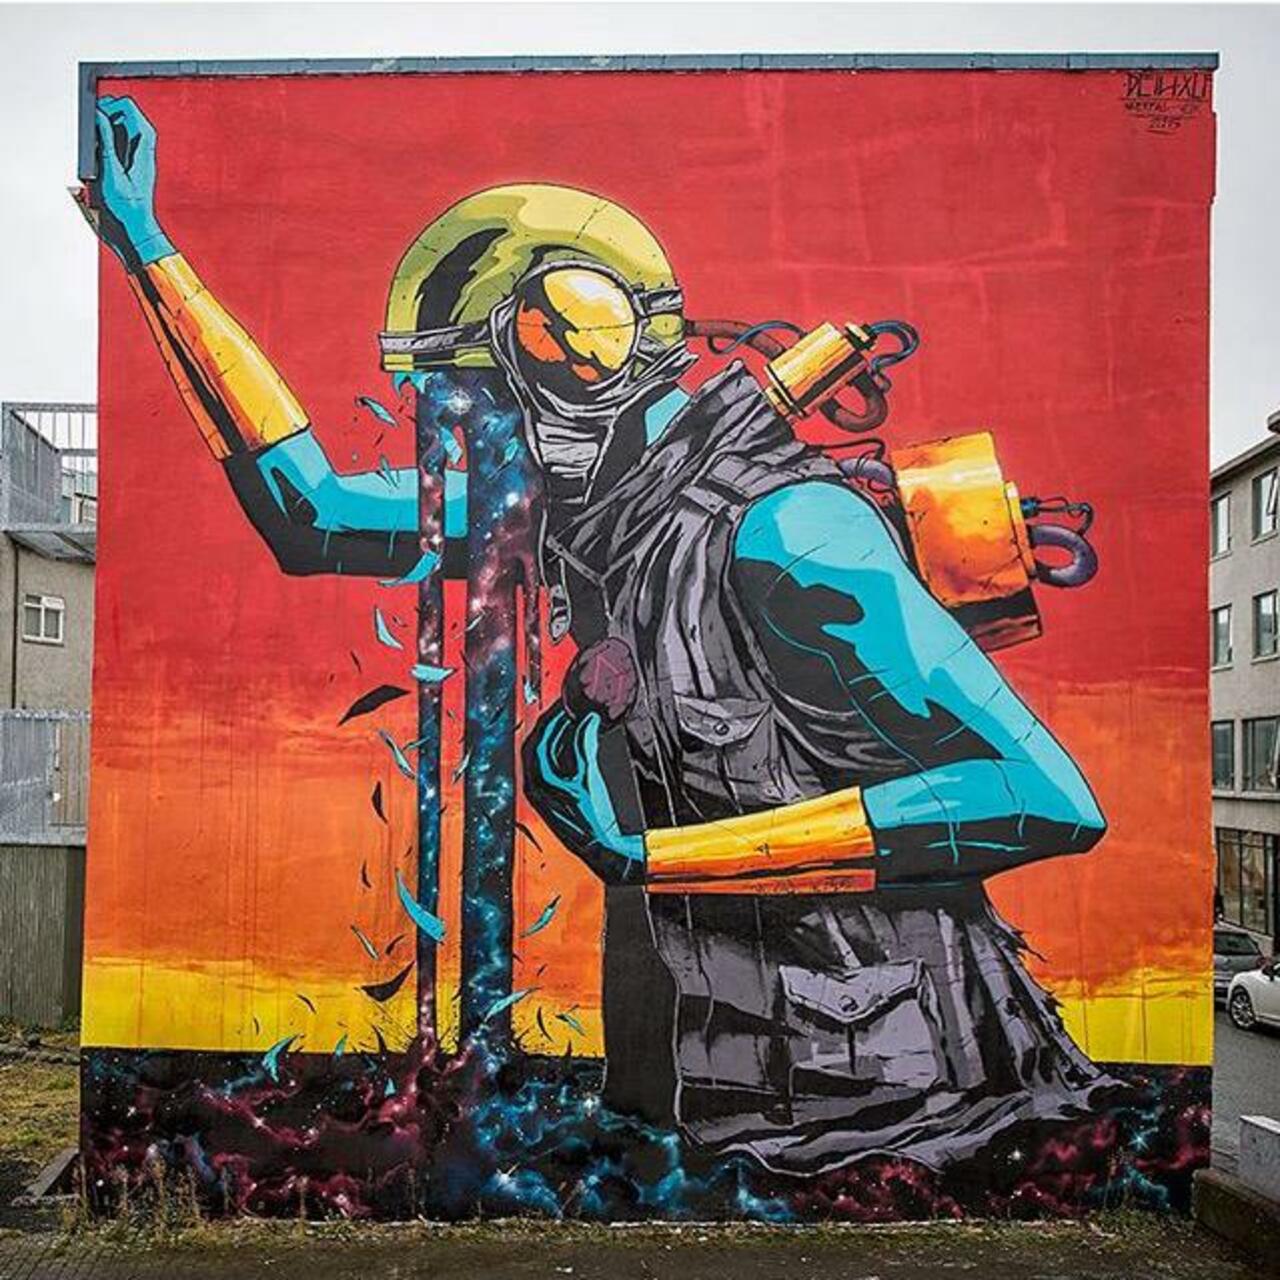 RT belilac "RT belilac "RT belilac "Street Art by Deih in Reykjavik 

#art #graffiti #mural #streetart https://t.co/FuDS40qc0T"""